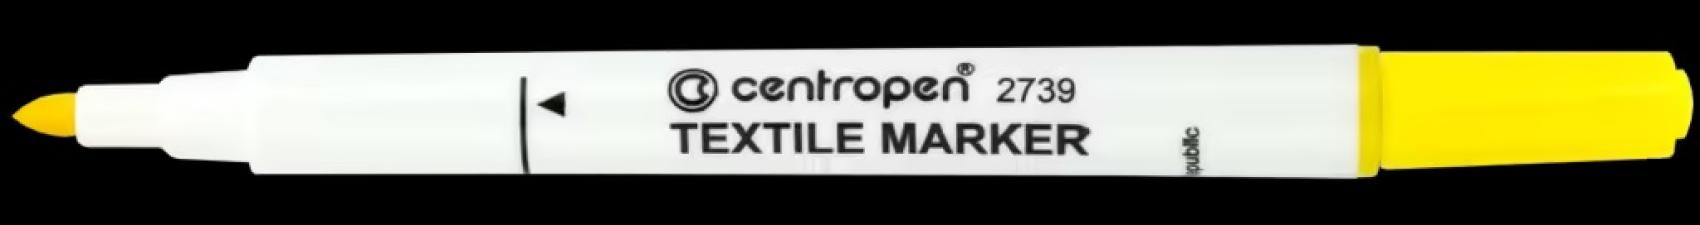 Popisova Centropen 2739 na textil nevyprateln lut - Kliknutm na obrzek zavete